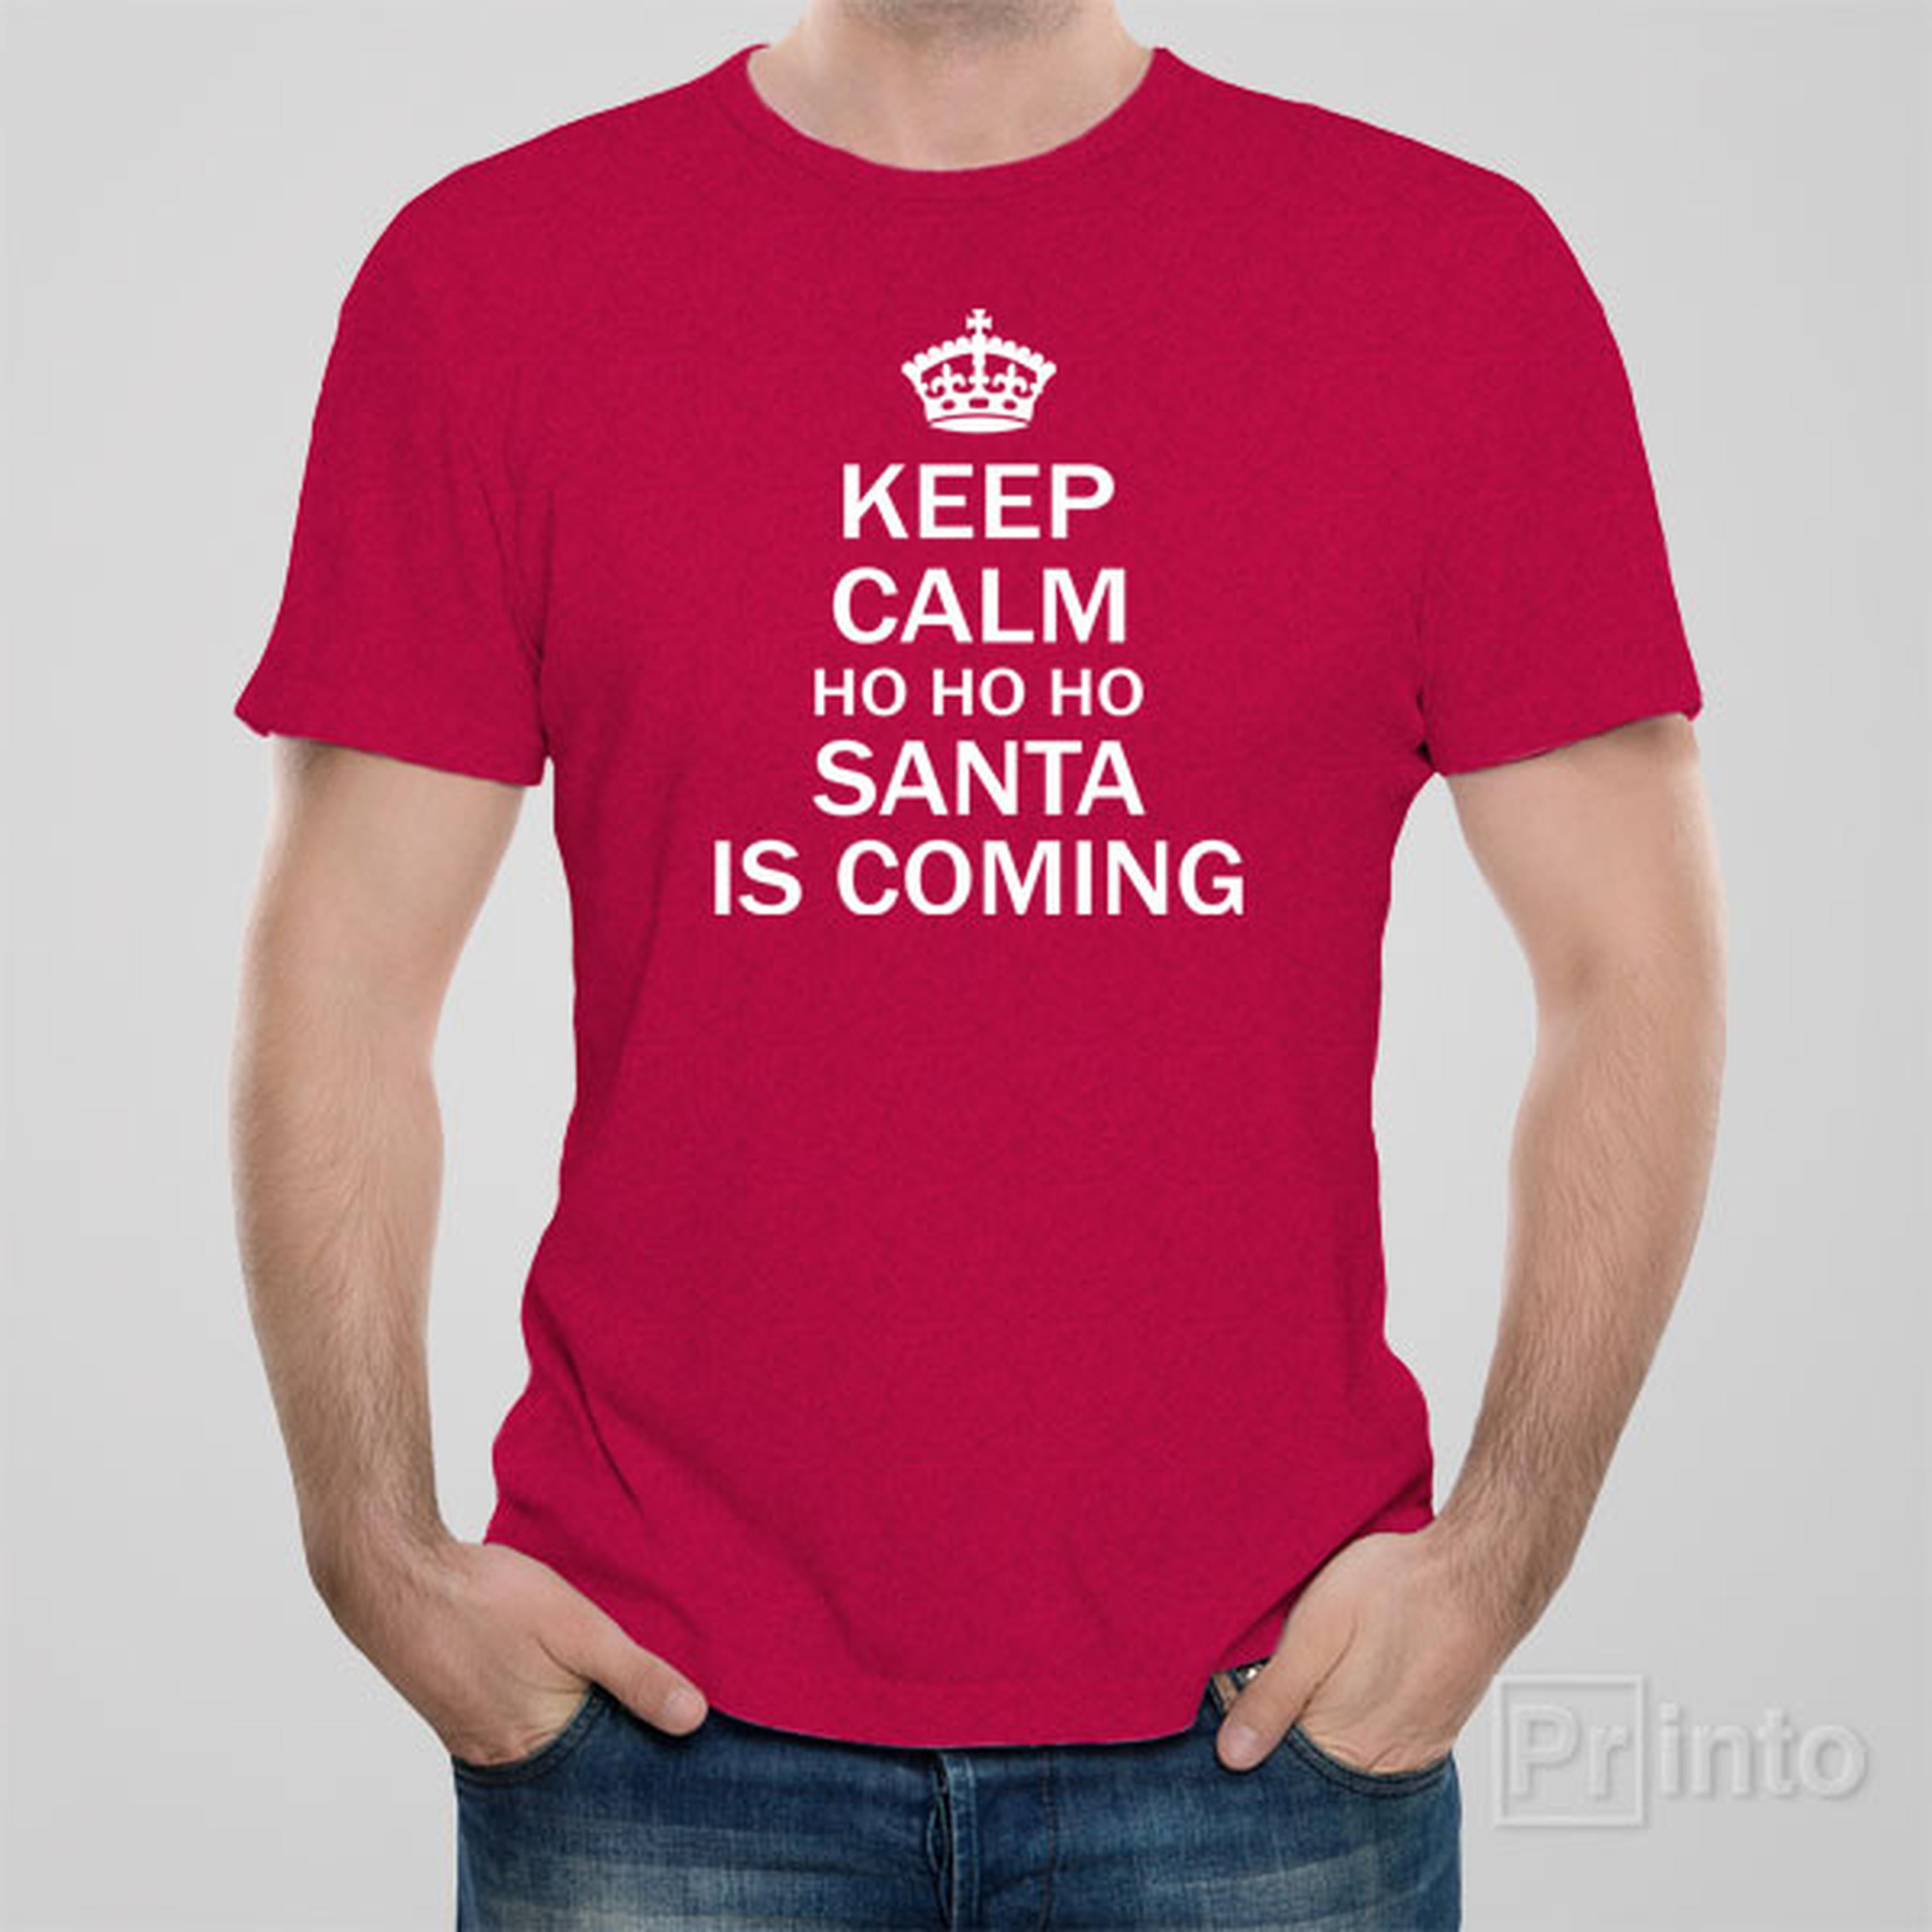 keep-calm-santa-is-coming-t-shirt